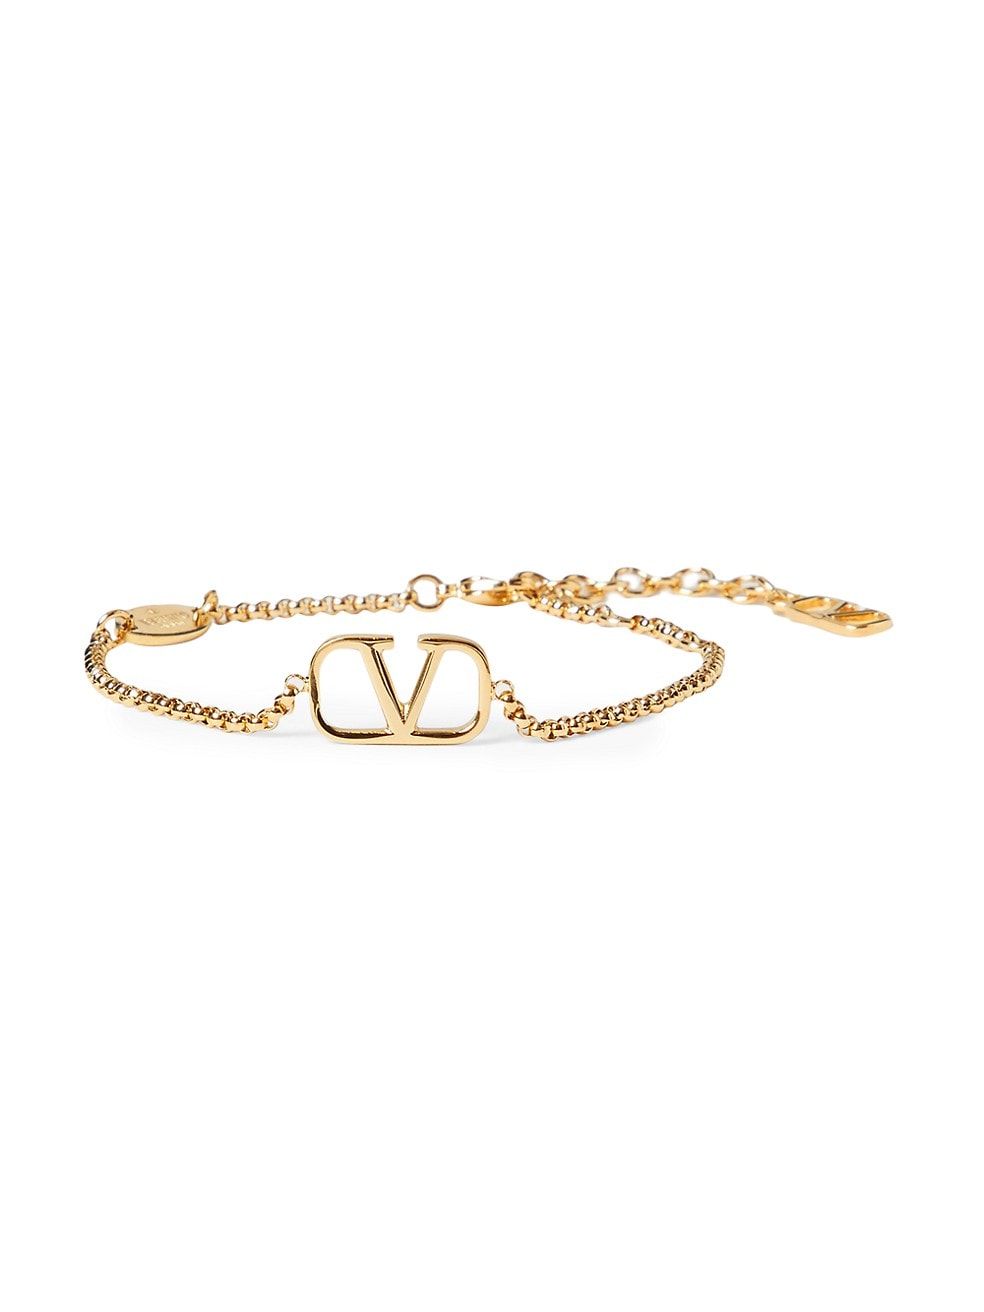 VLogo Metal Chain Bracelet | Saks Fifth Avenue